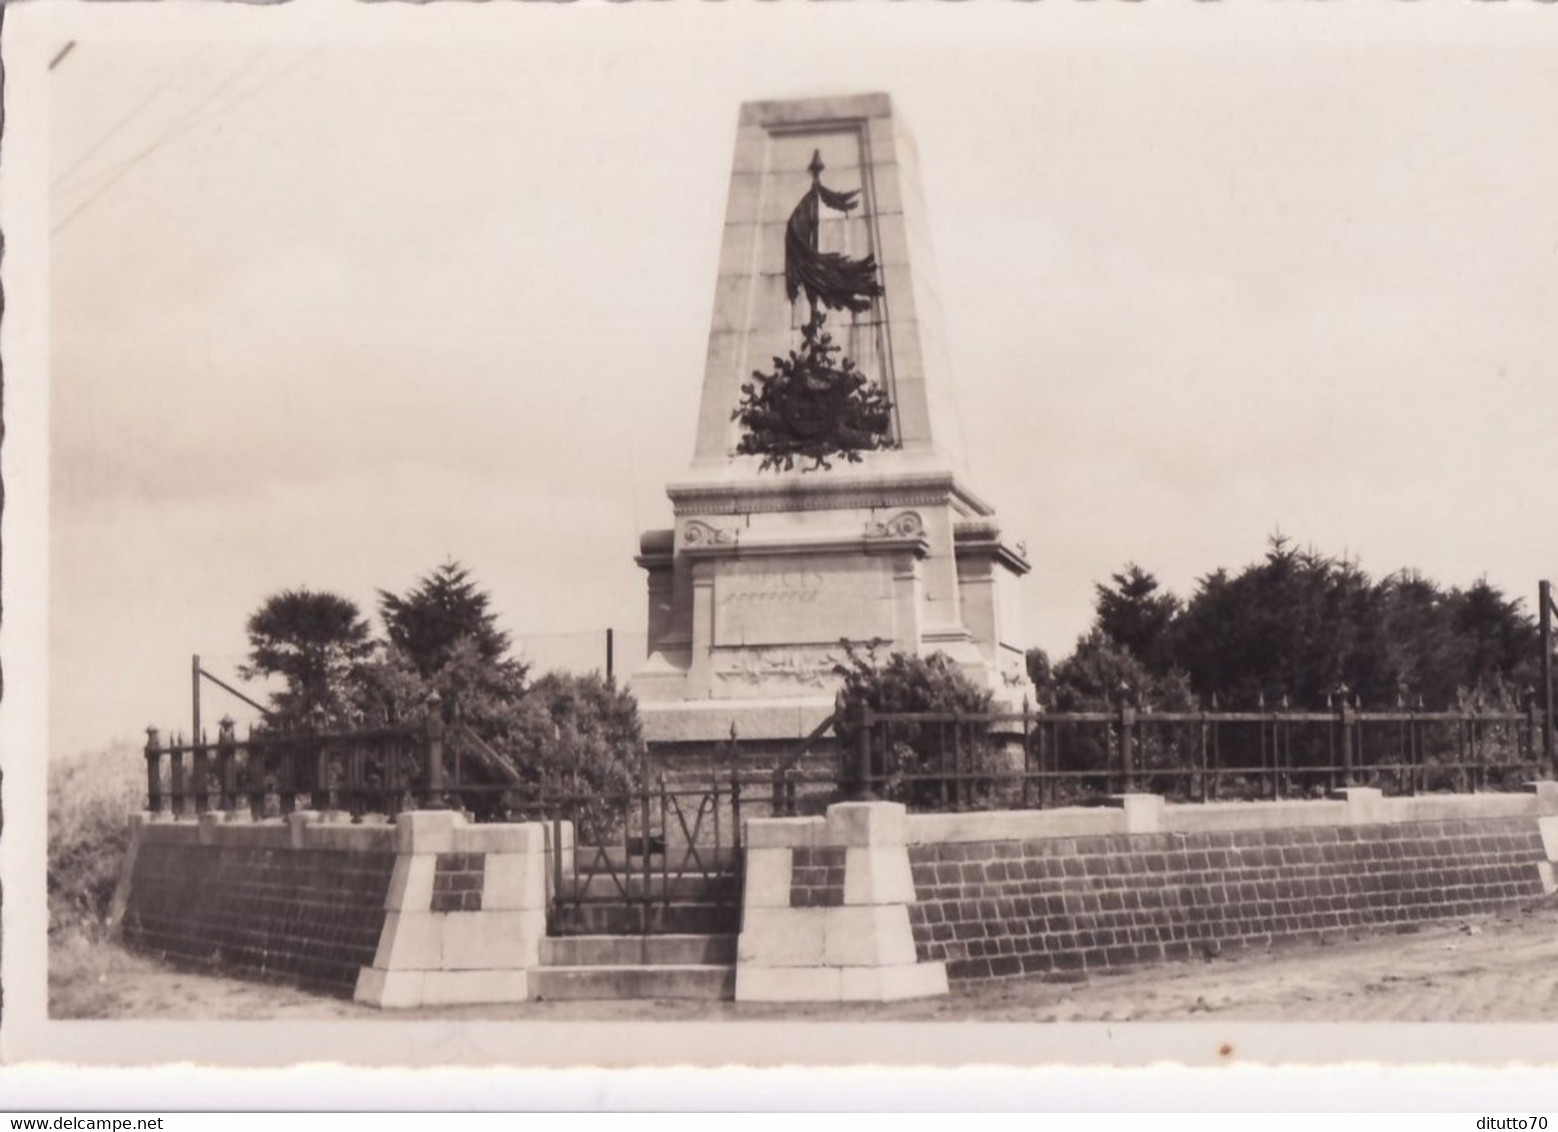 Waterloo - Monument De Belges - Formato Piccolo Non Viaggiata – FE170 - Waterloo